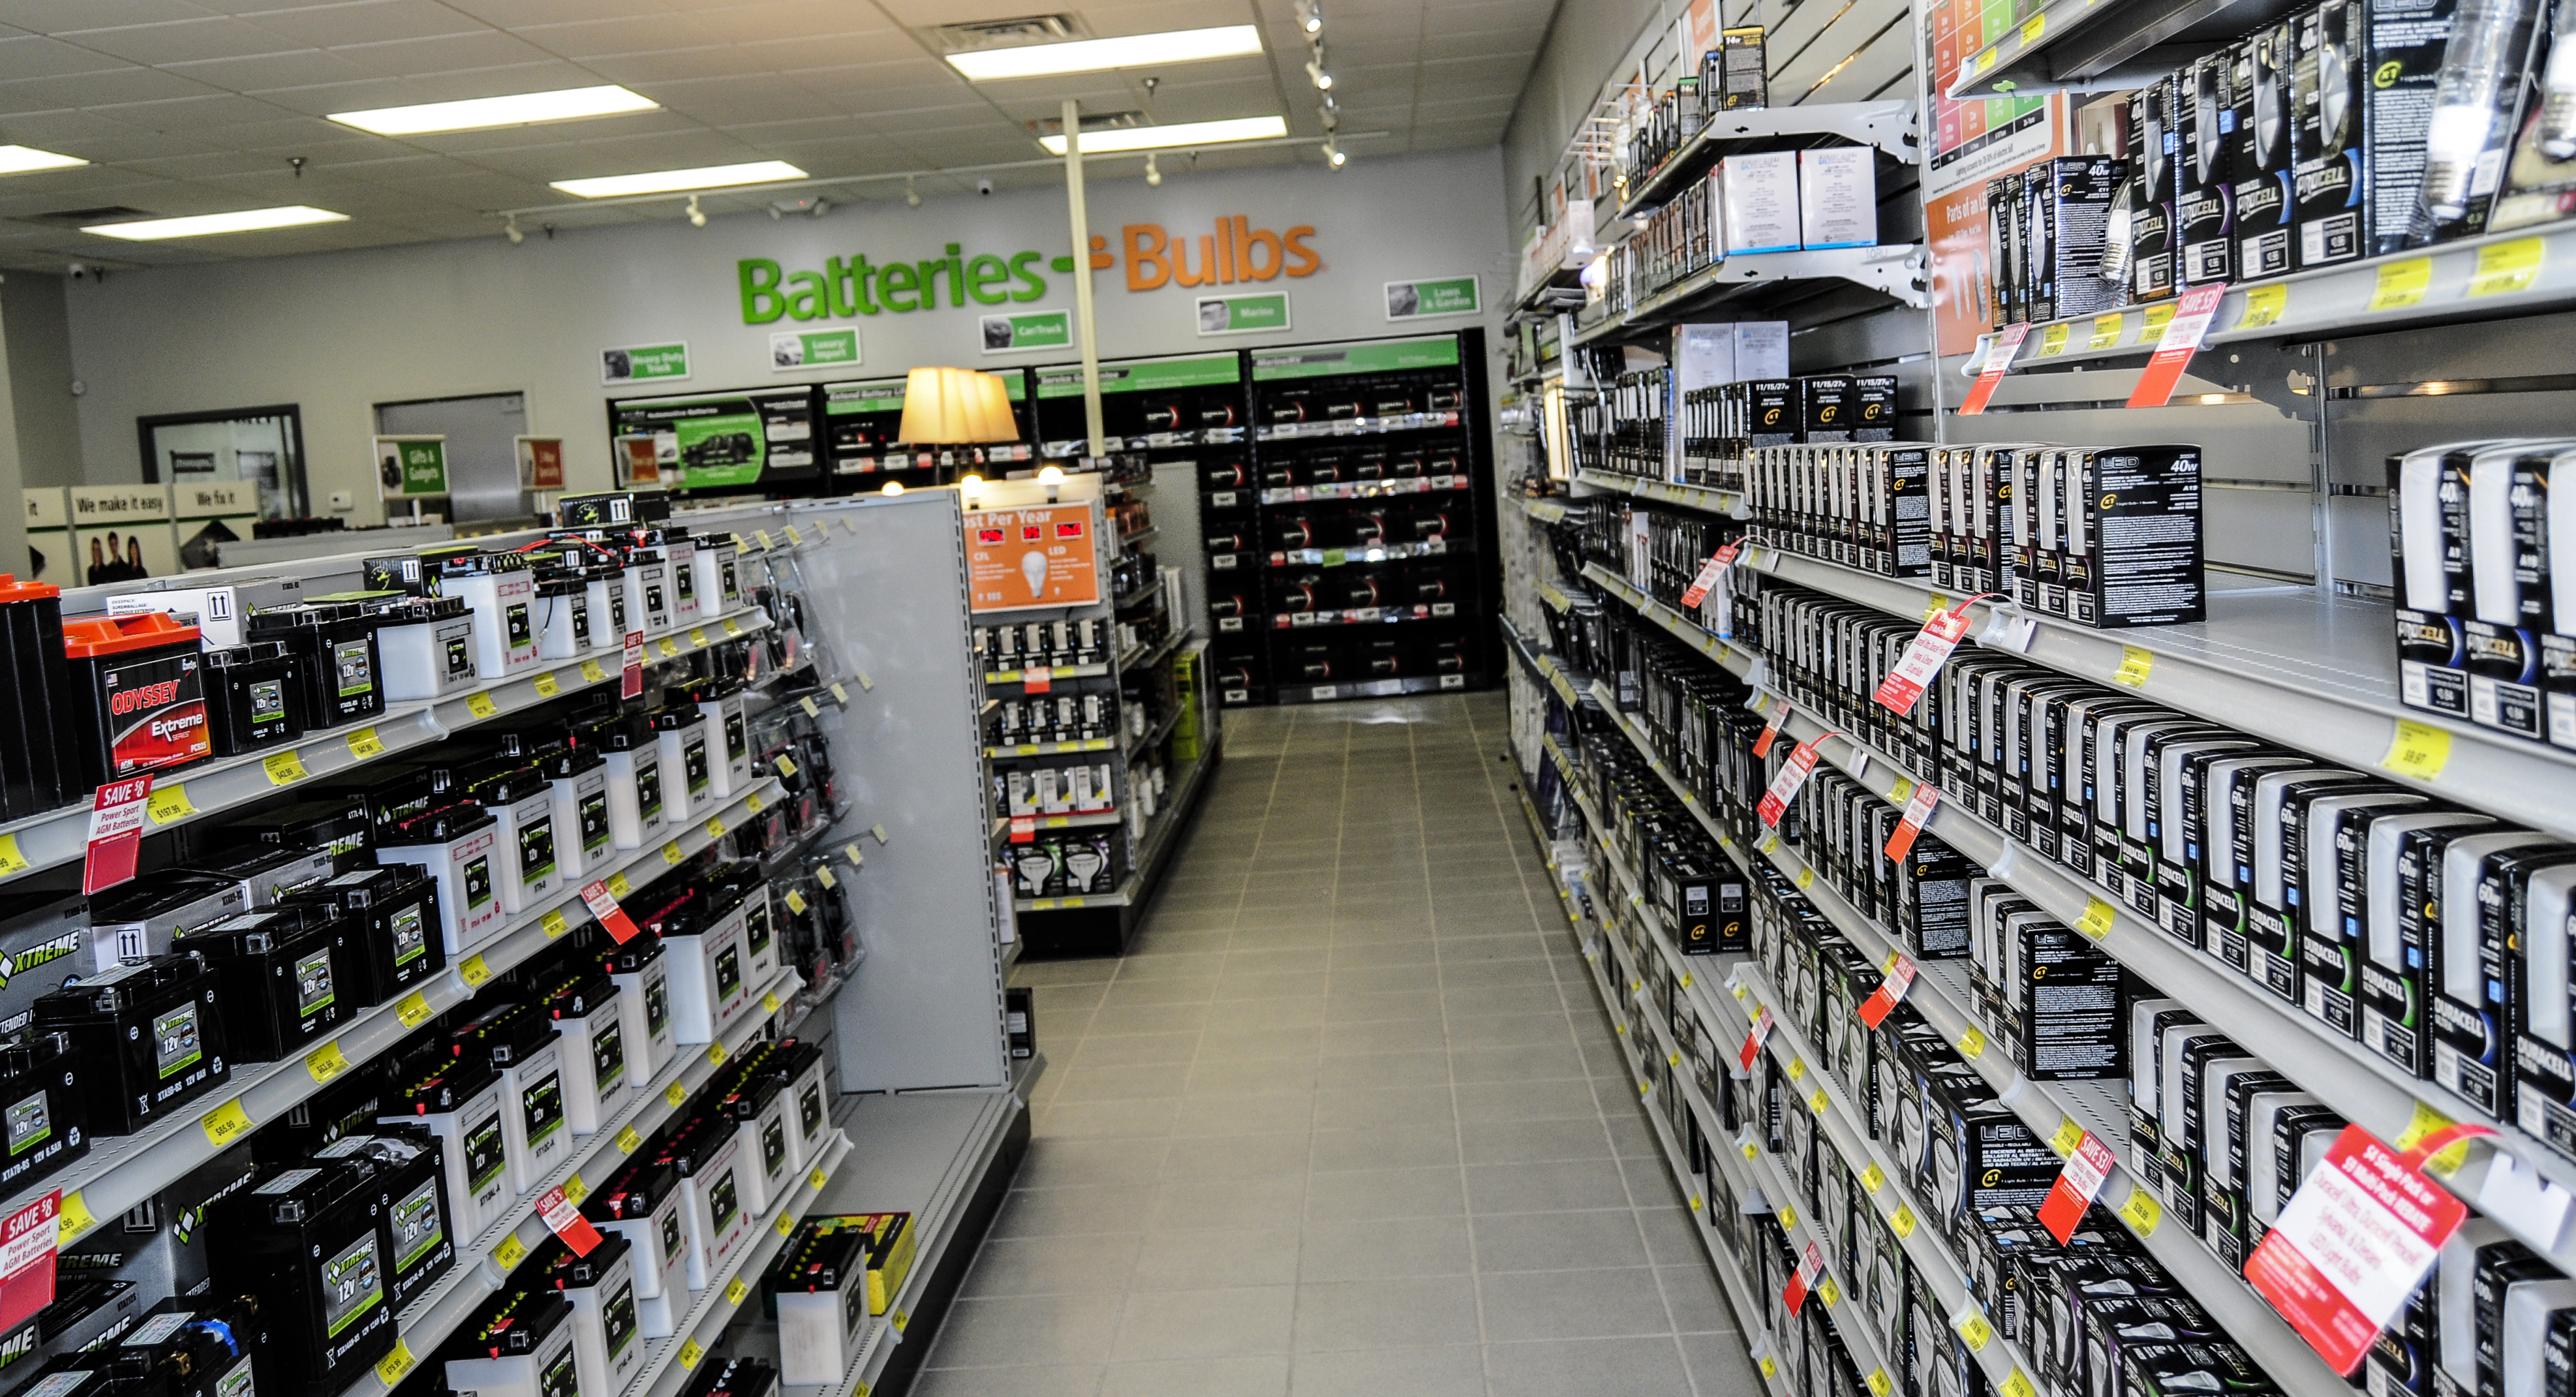 Battery store. Shuxin Battery Store. Batteries Bulbs White Black. Batteries Bulbs White Black picture.